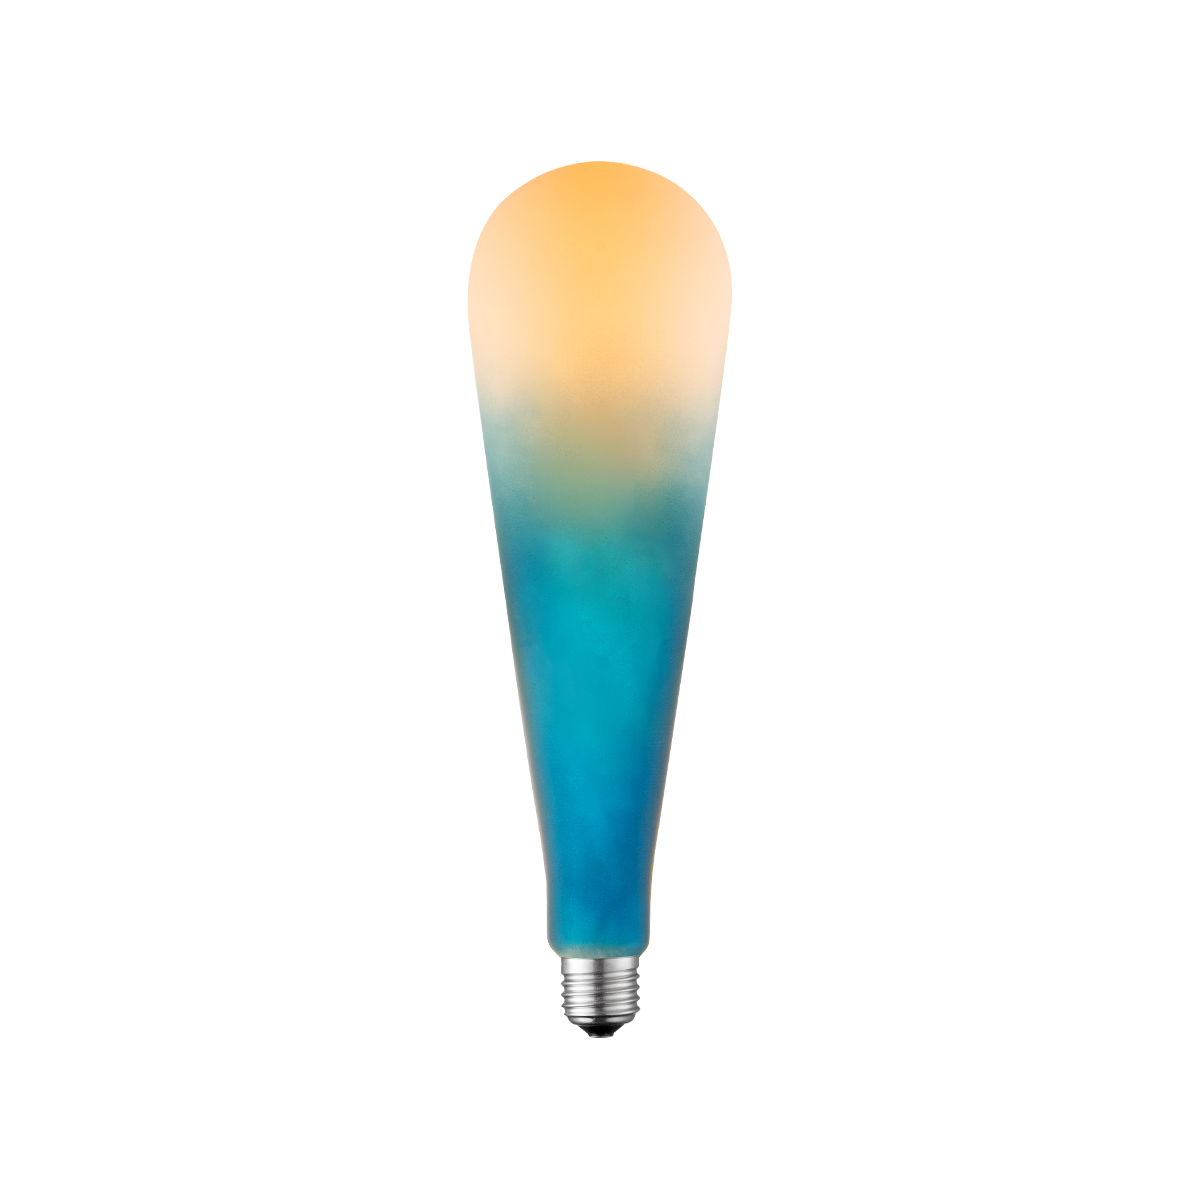 Tangla lighting - TLB-9002-04M - LED Light Bulb Single Spiral filament - 4W gradient blue opal - standard - non dimmable - E27